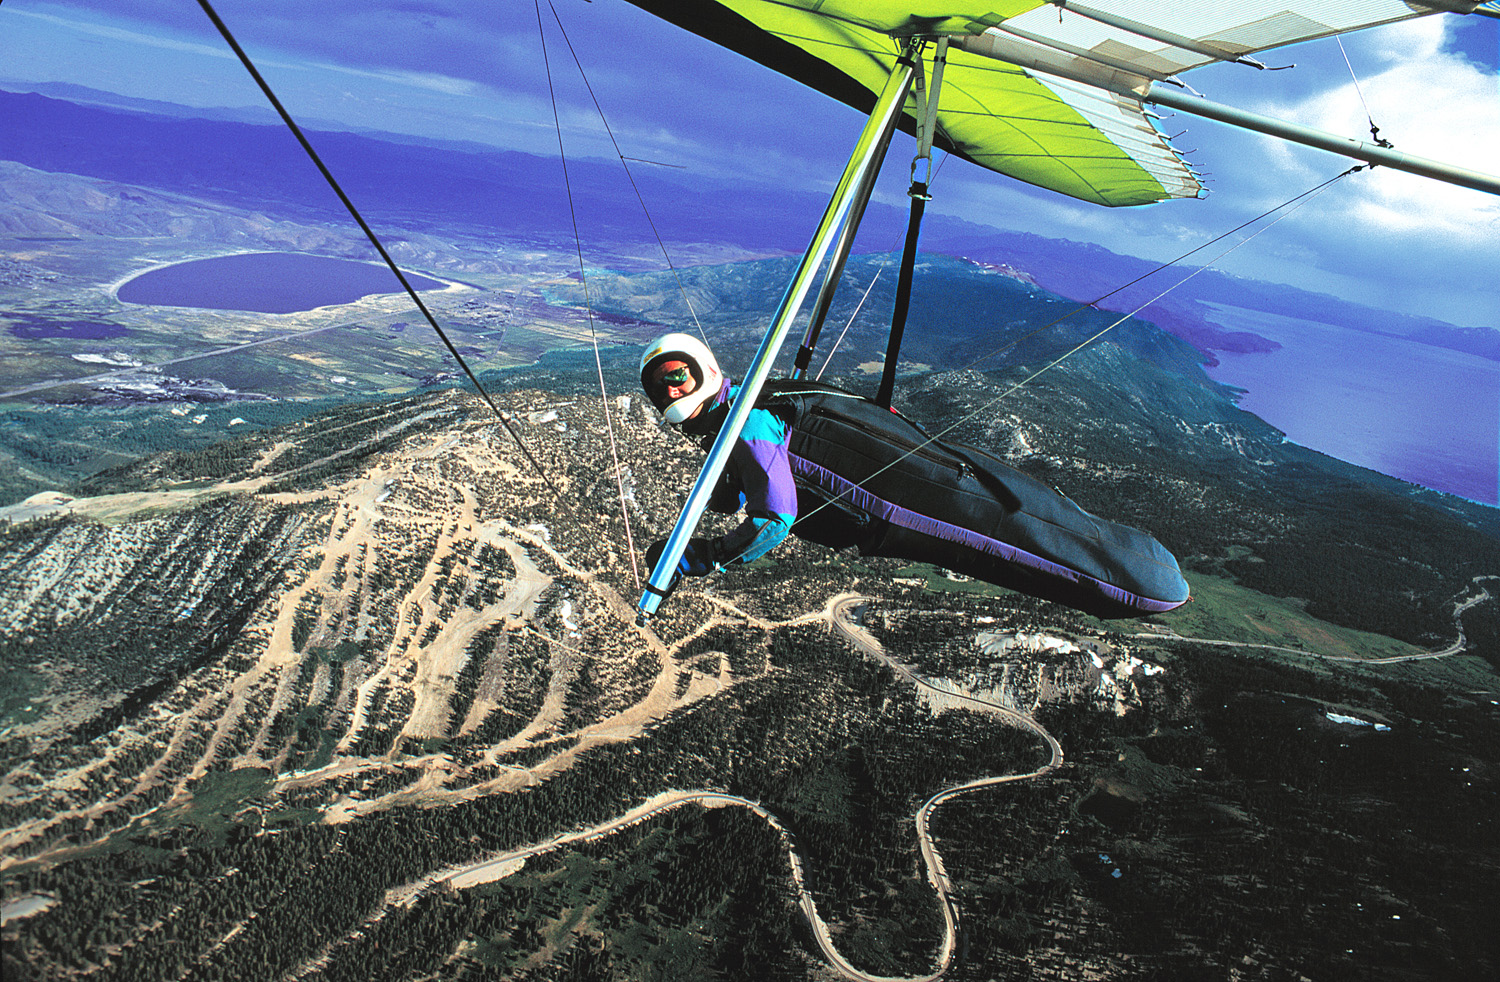 Paul Hamilton soaring hang glider in front of Slide Mountain, NV